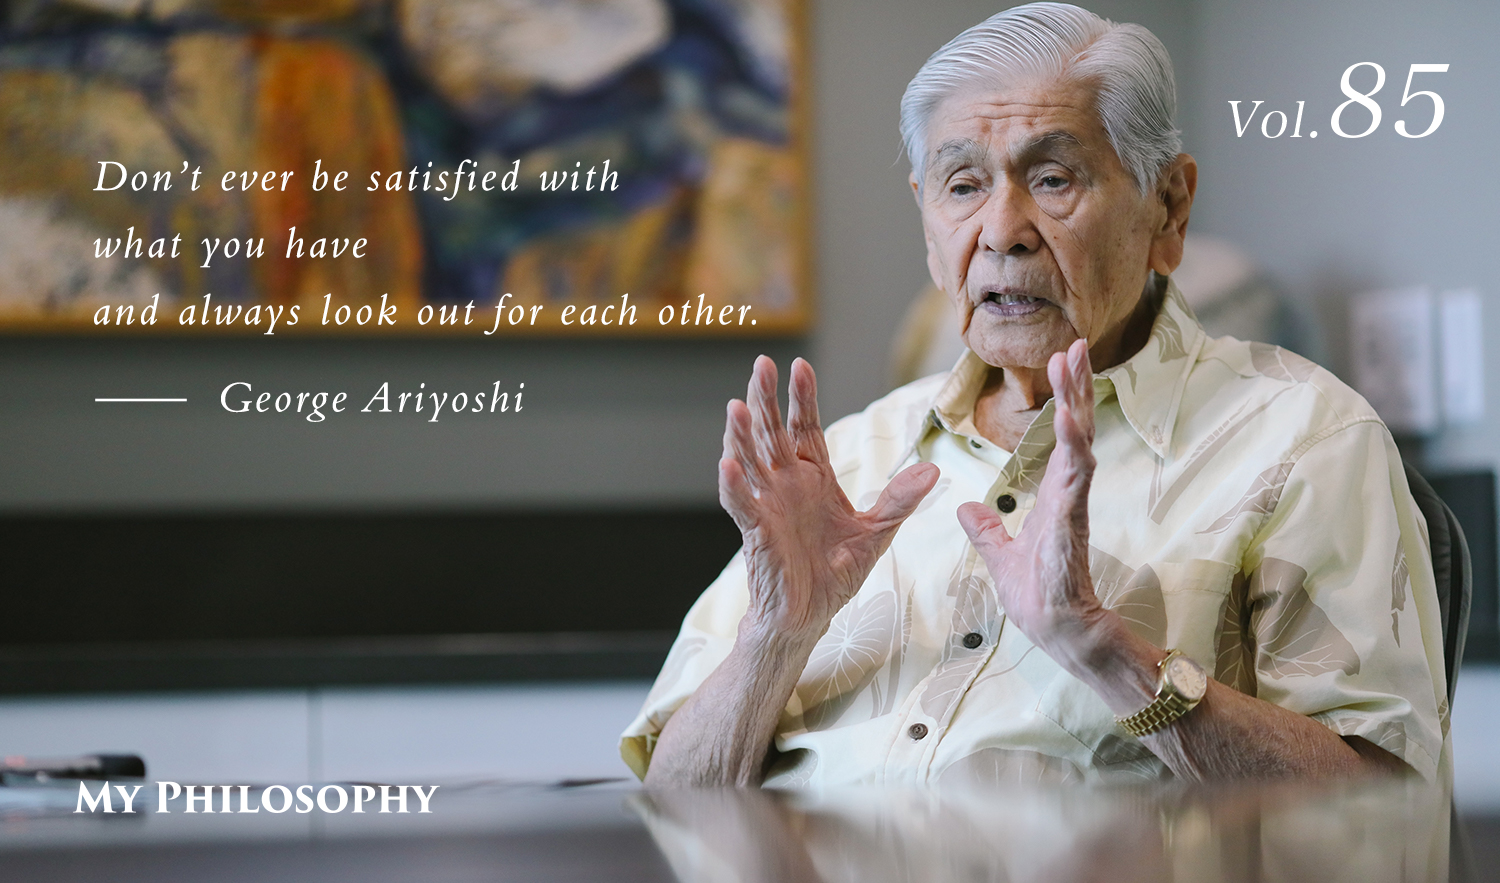 Vol.85 “My Philosophy” George Ariyoshi